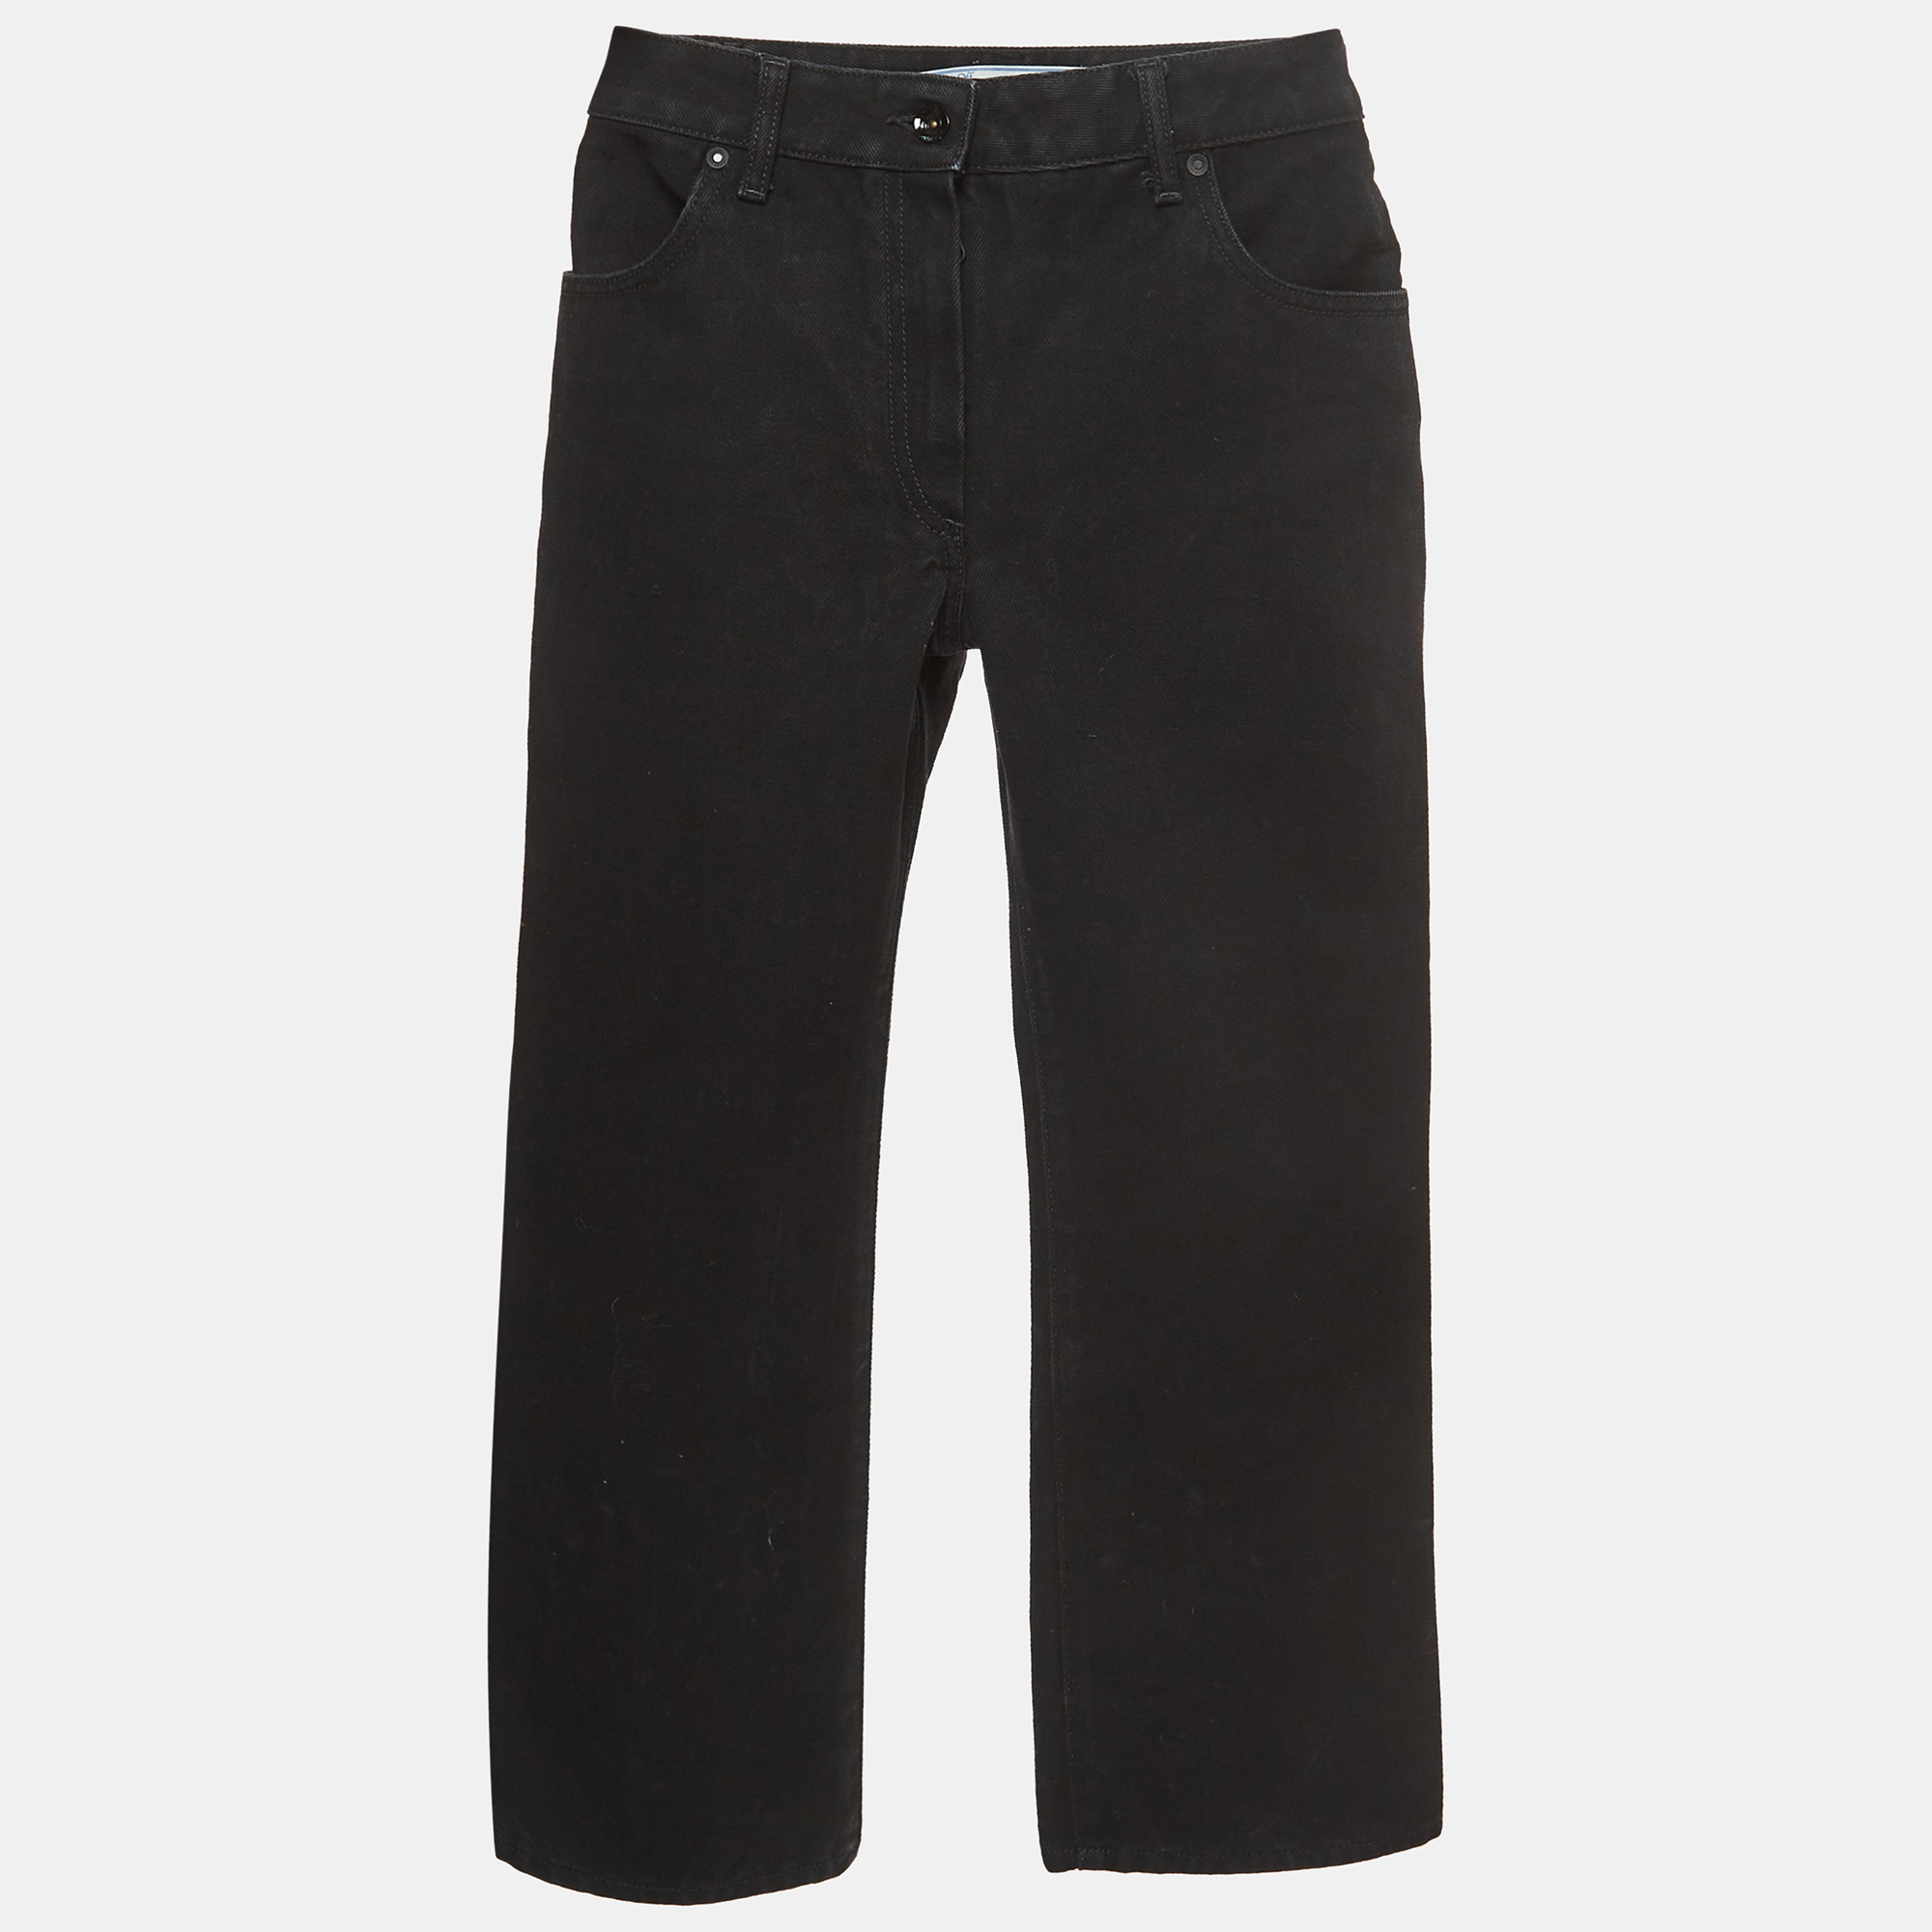 Off-white black diagonal striped denim high waist jeans s waist 24"